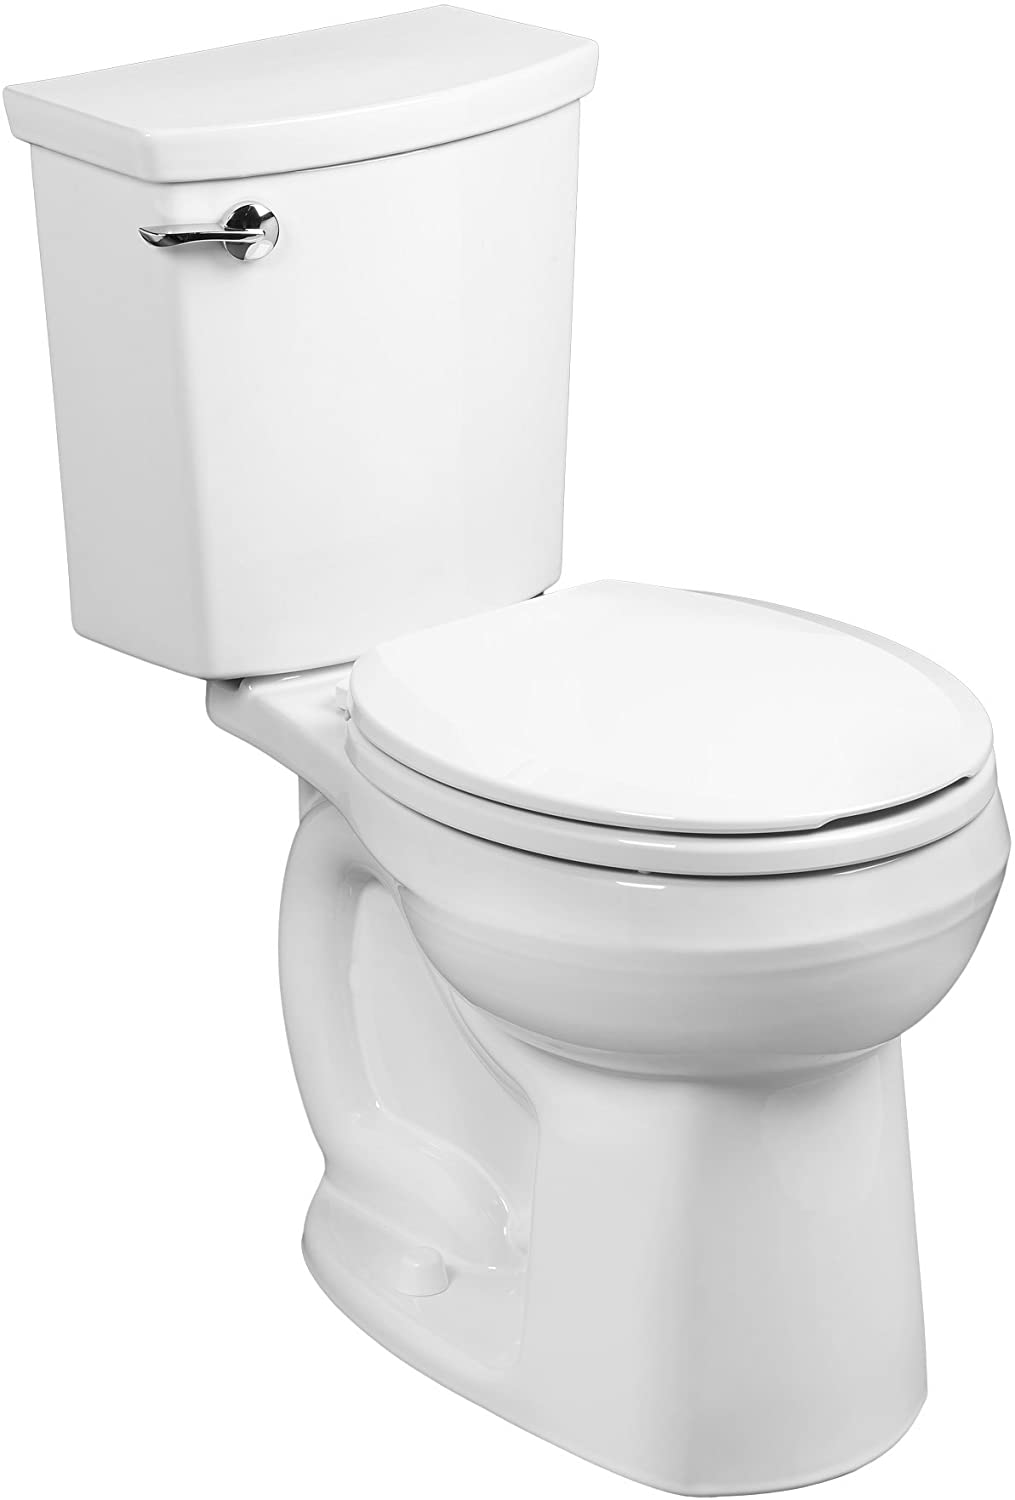 American Standard 288DA Toilet